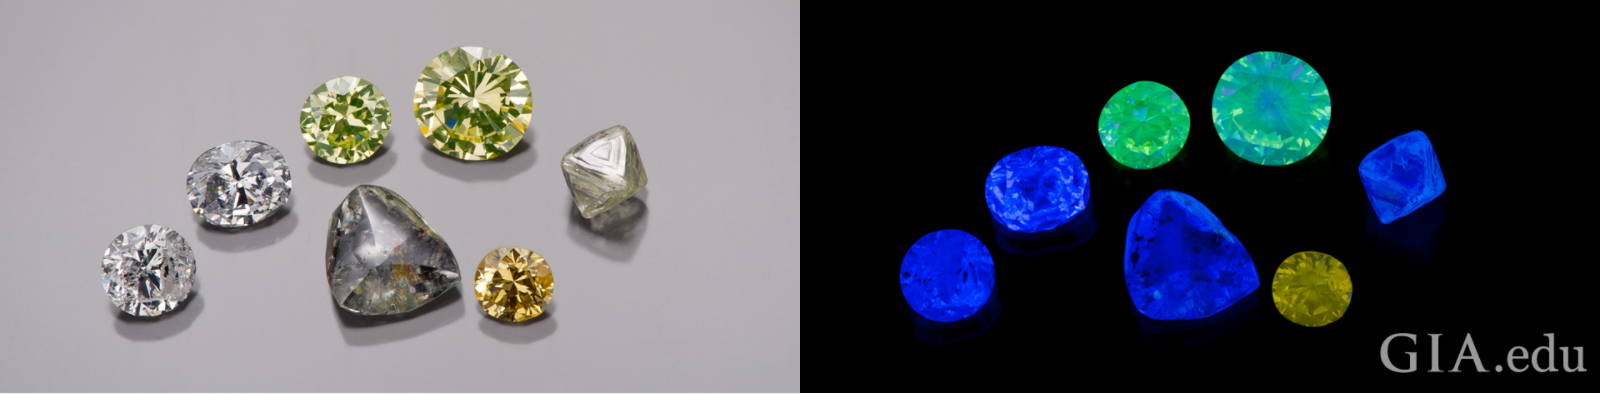 fluorescent diamonds in normal and UV light